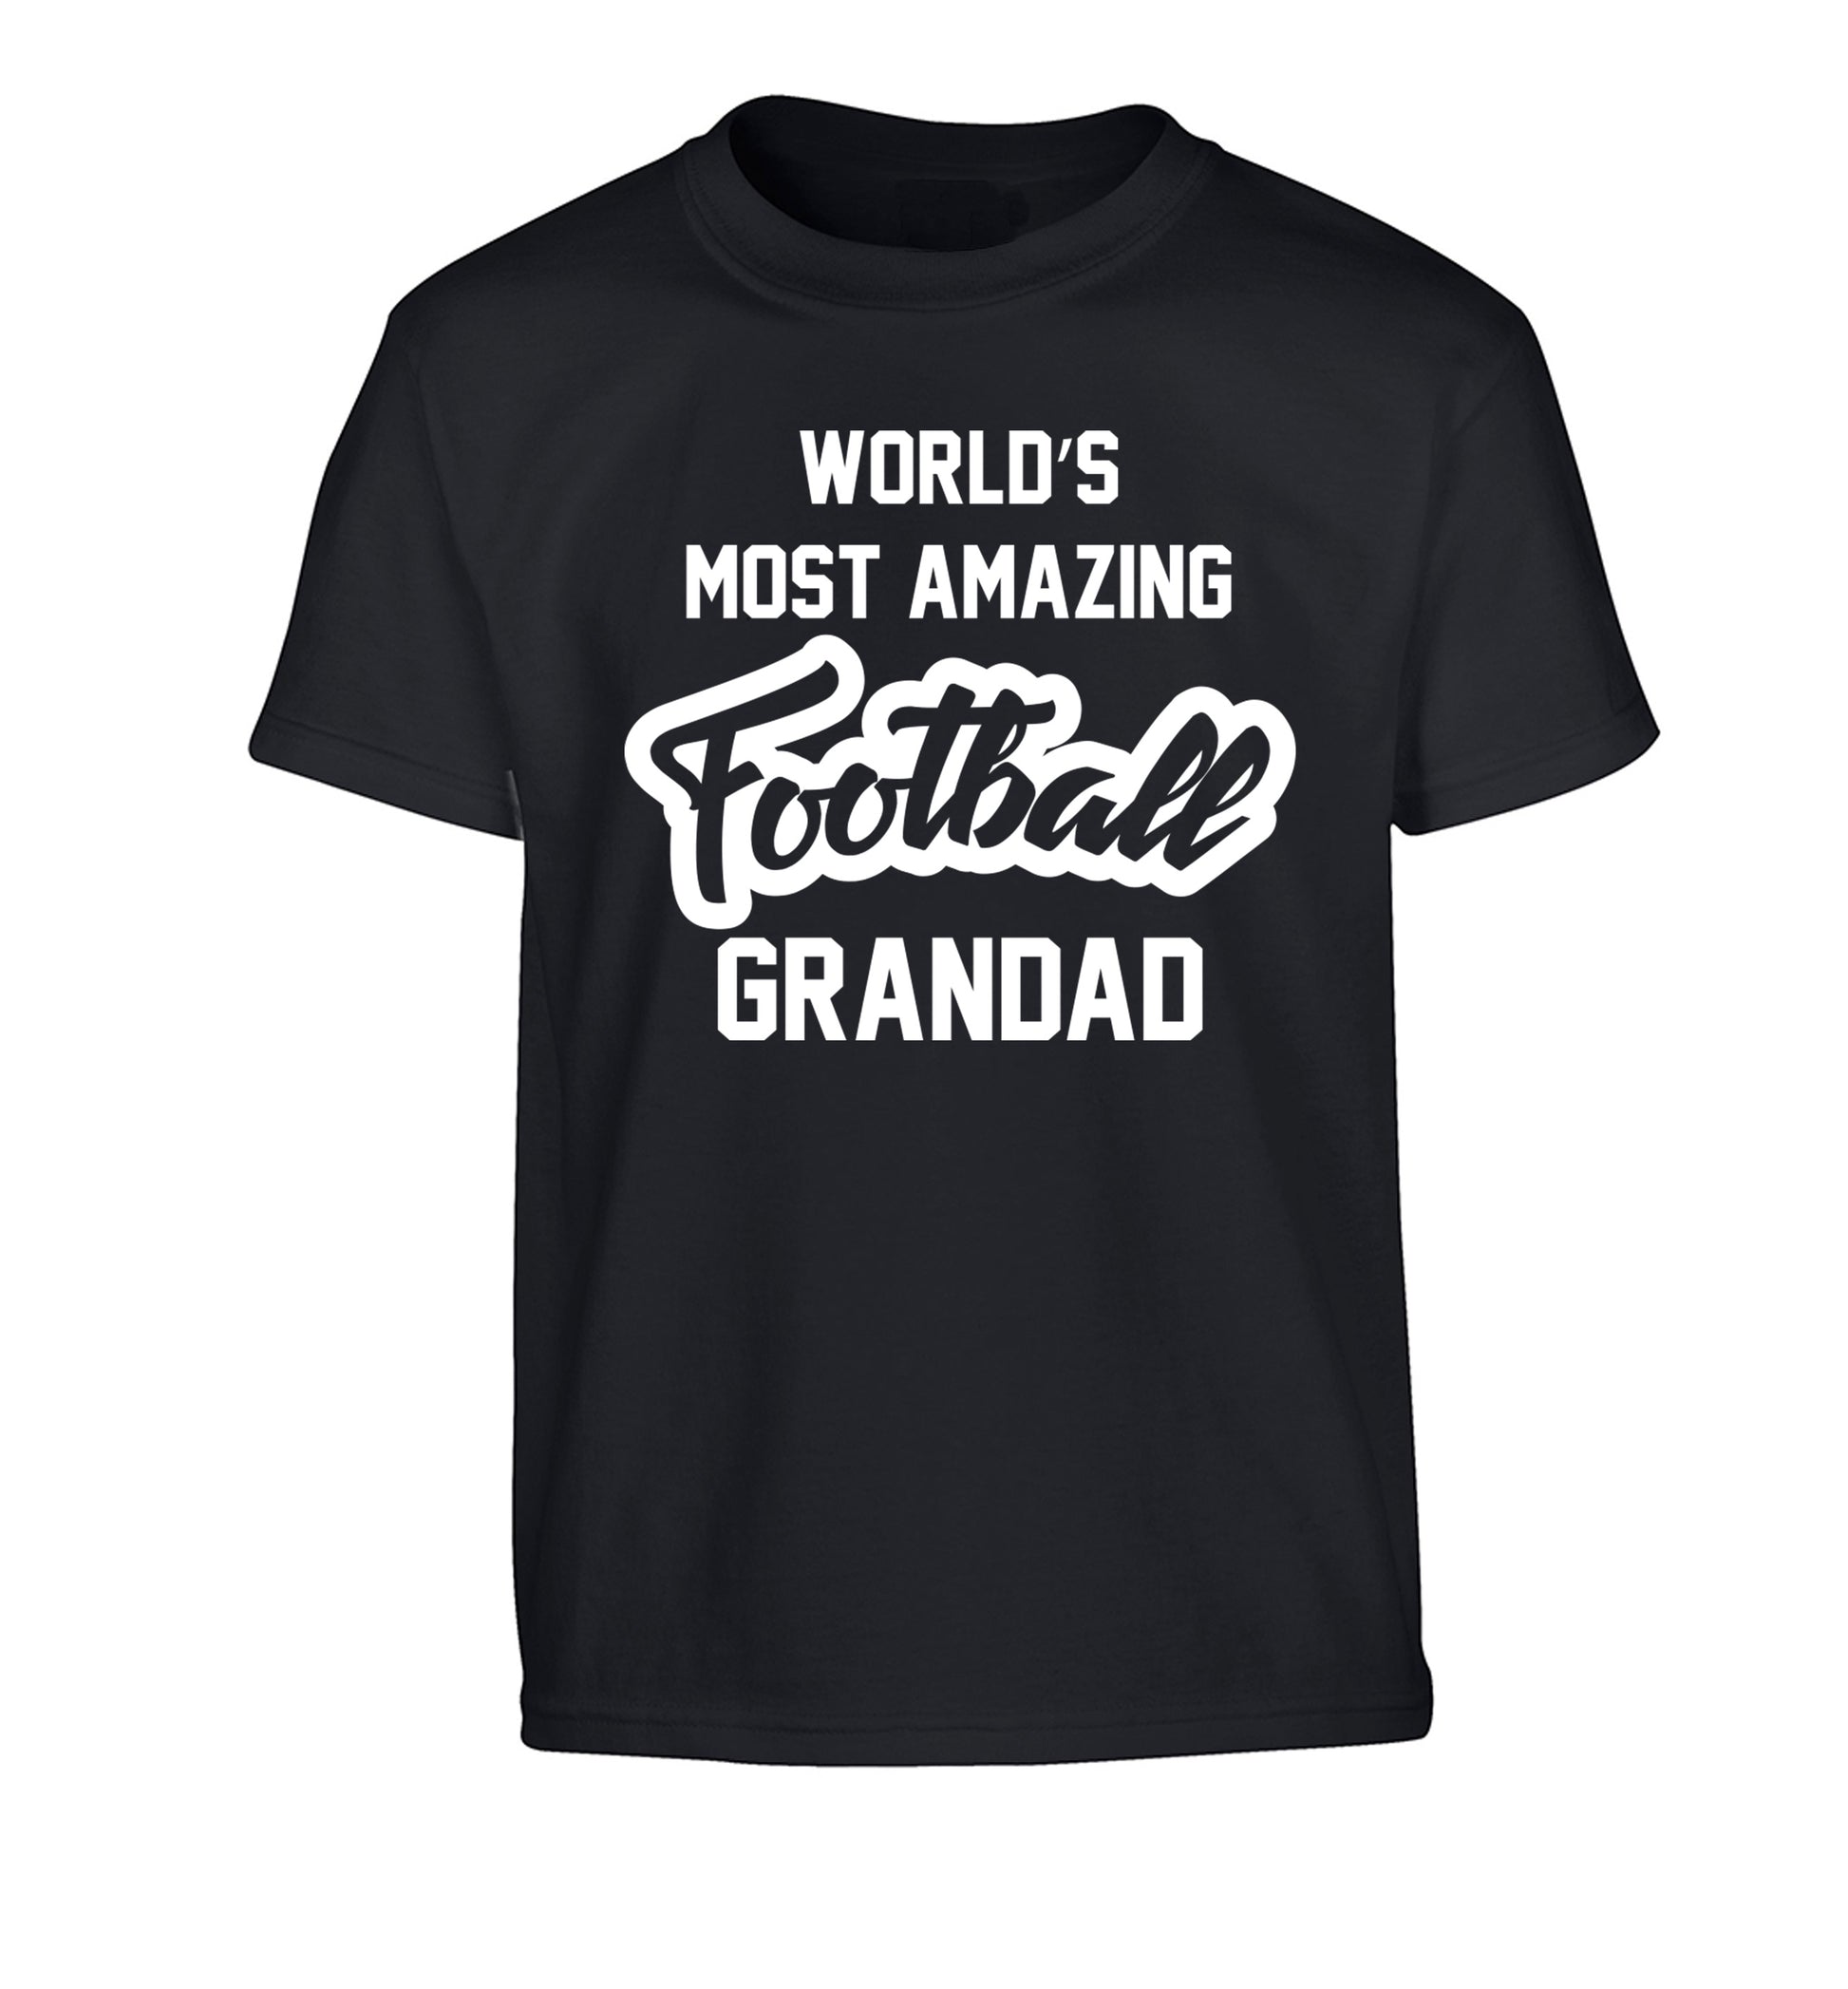 Worlds most amazing football grandad Children's black Tshirt 12-14 Years